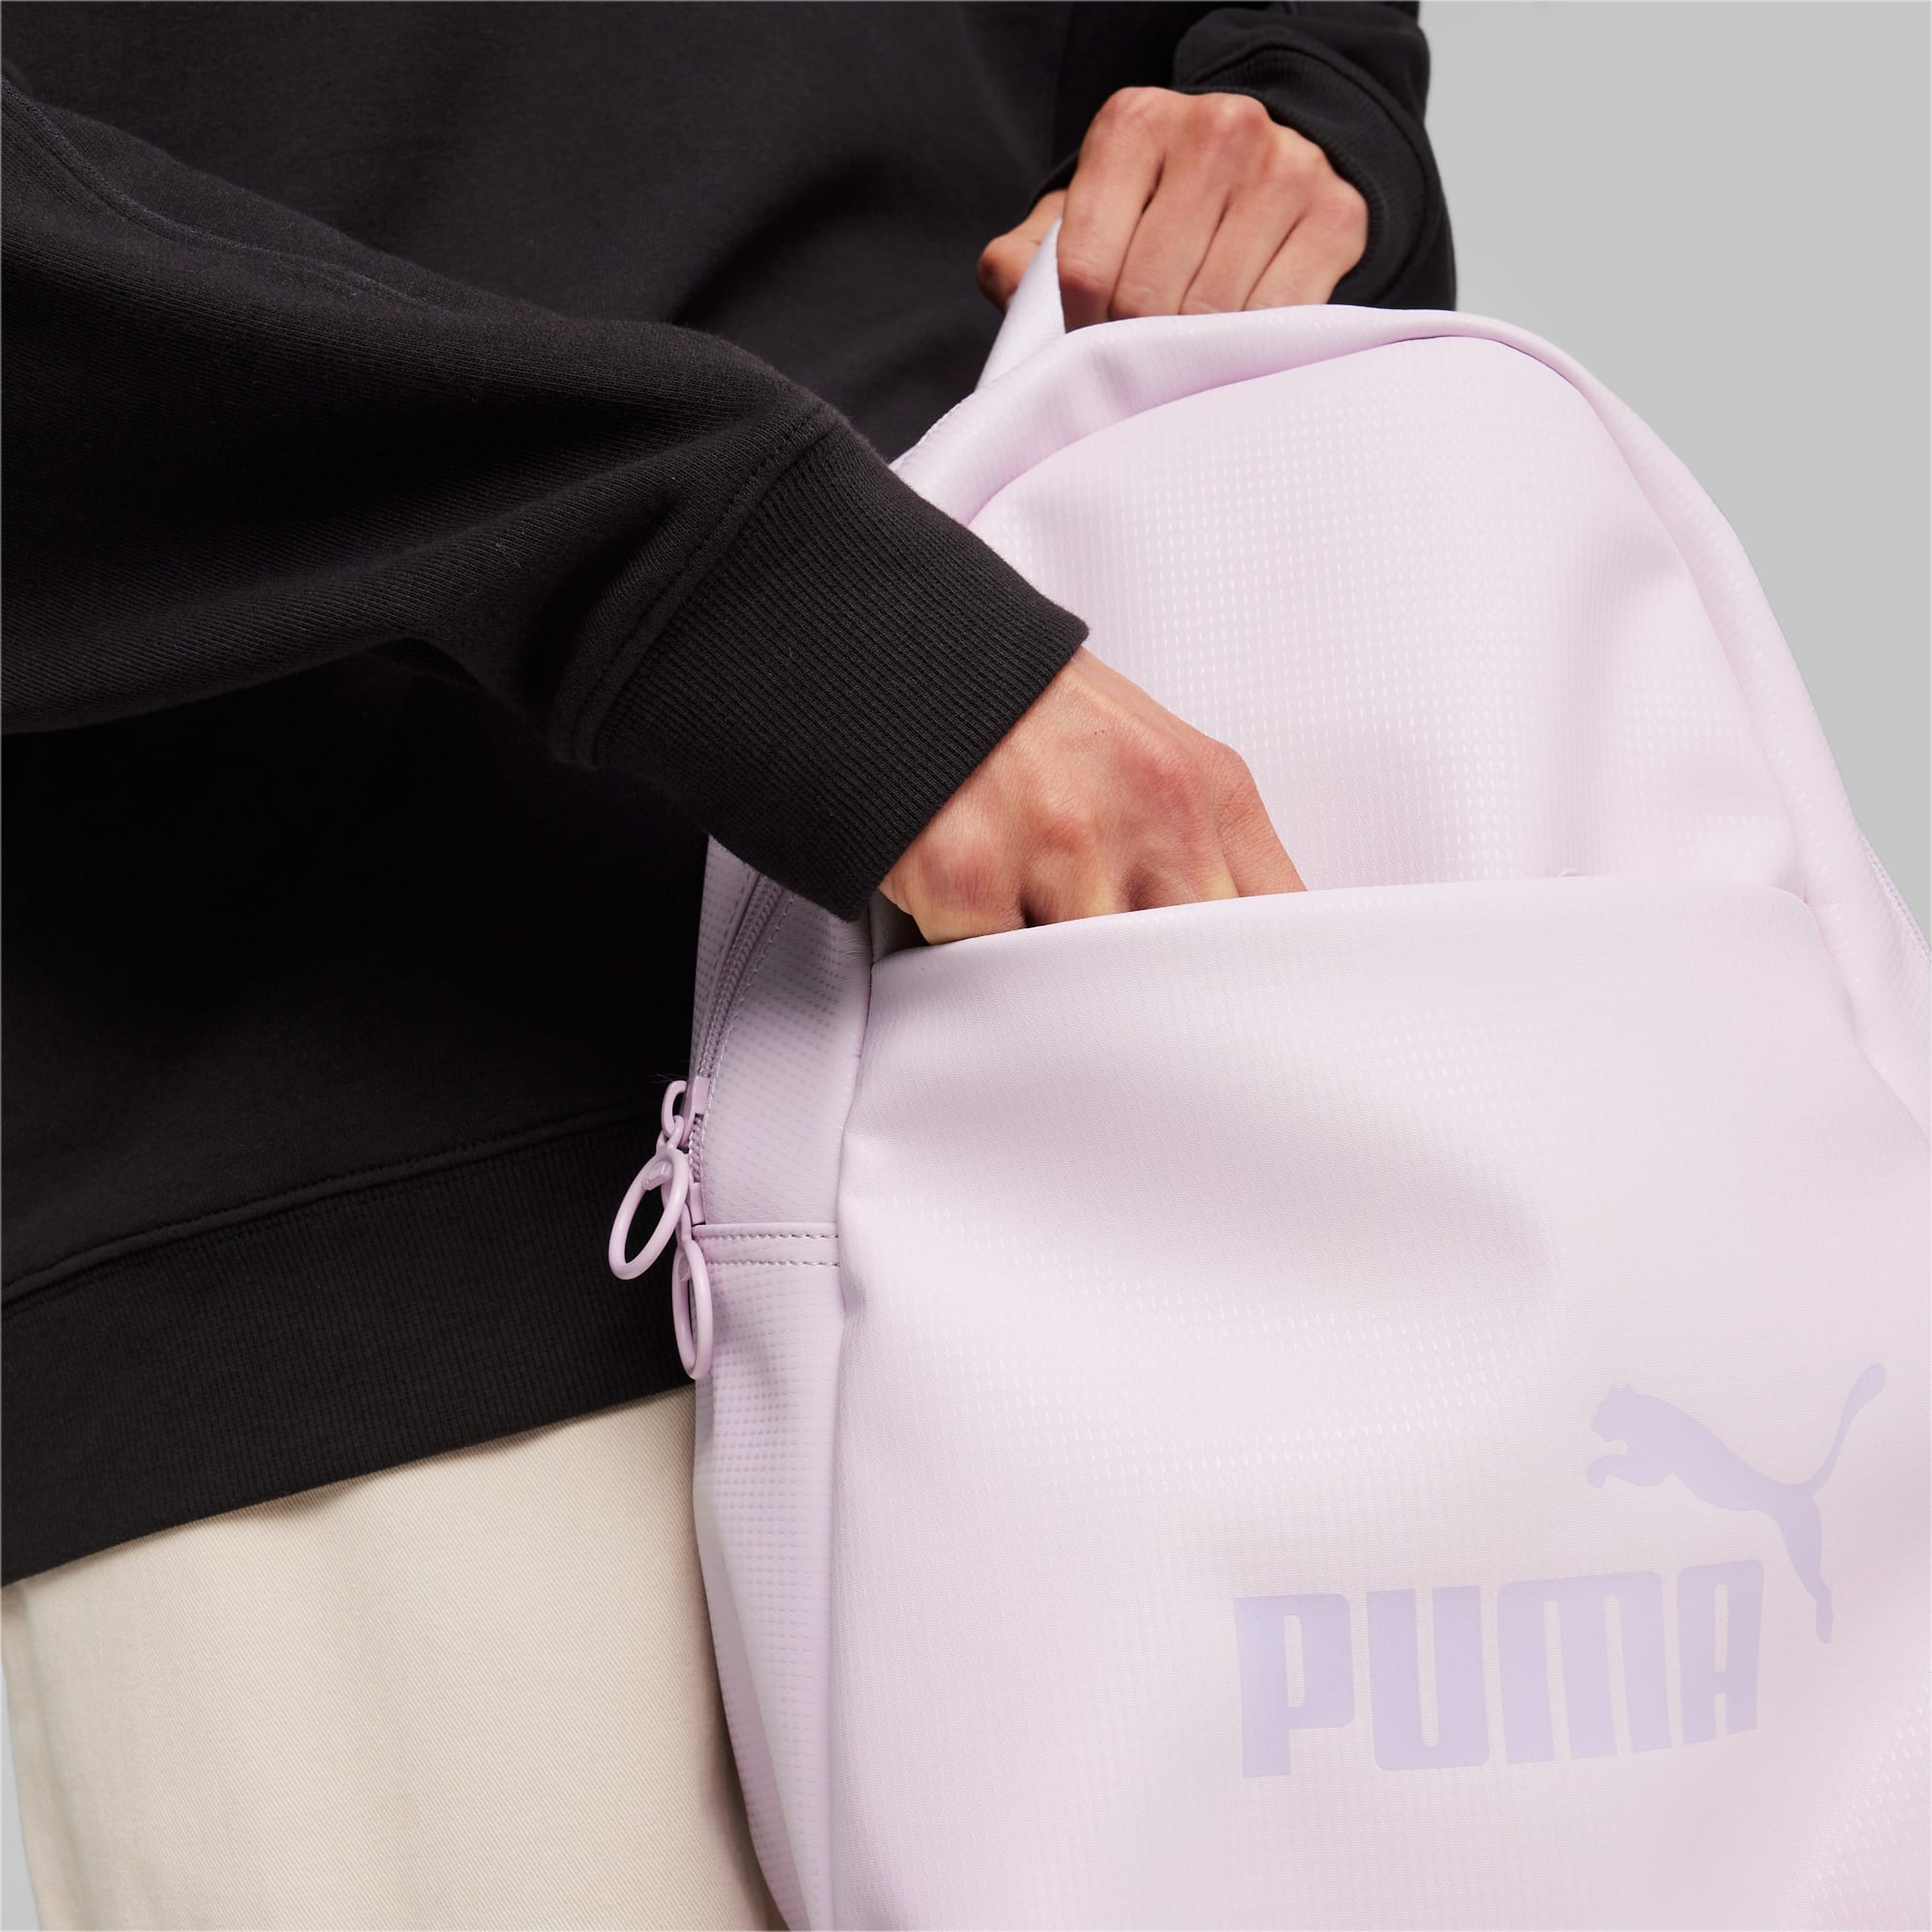 Women's PUMA Core Up Backpack (10 Liters), Grape Mist, Accessories